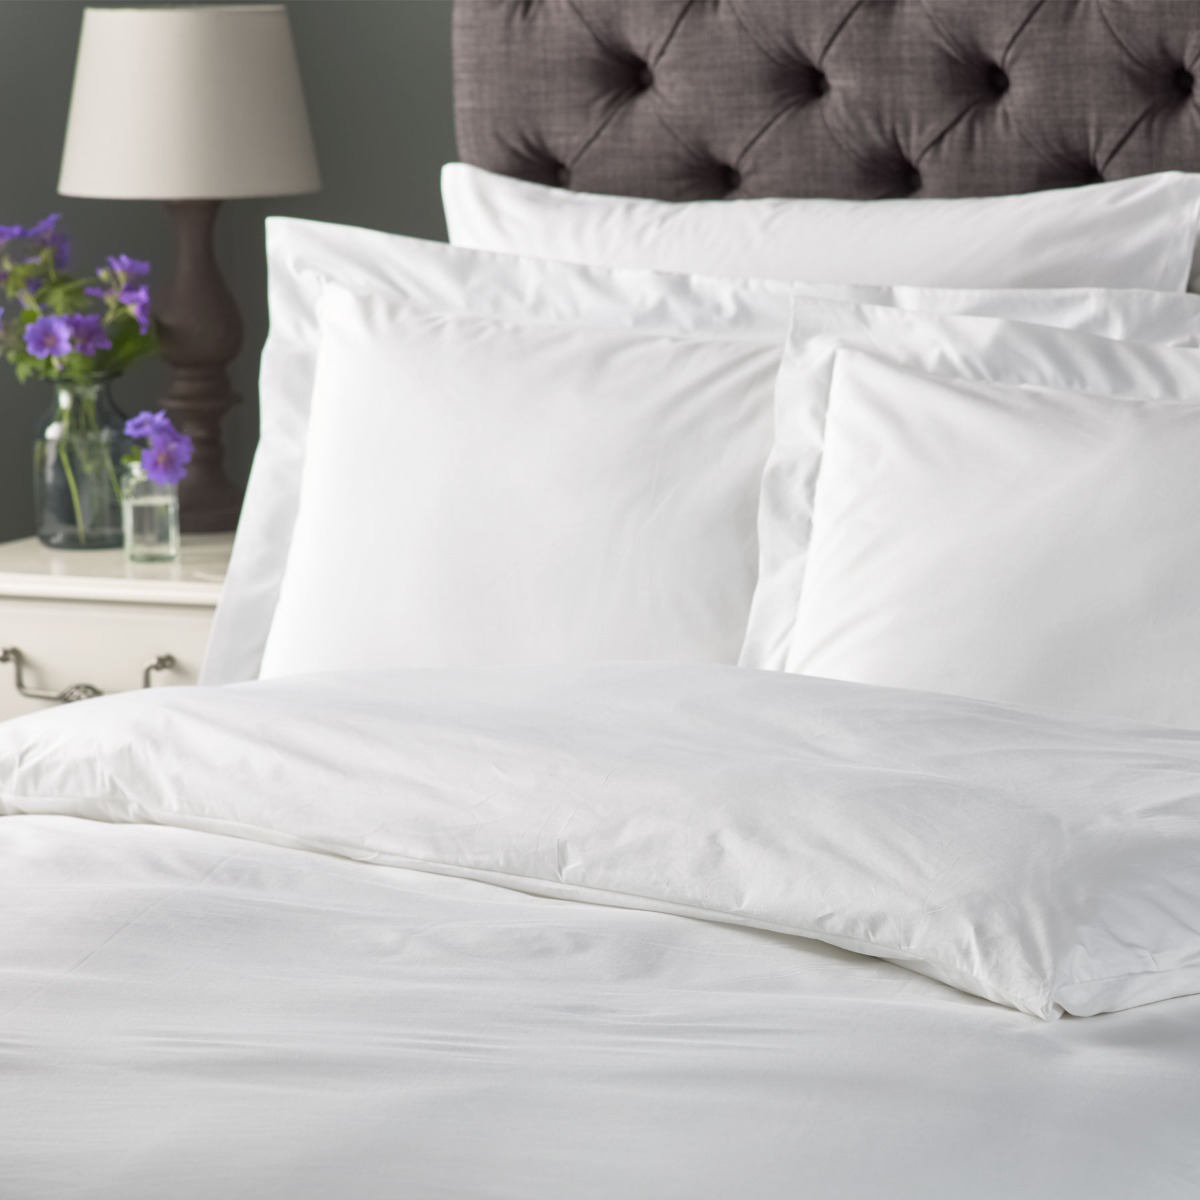 2 X Luxury Percale Non-iron Plain Dyed Poly Cotton Housewife Pillow Cases Black 